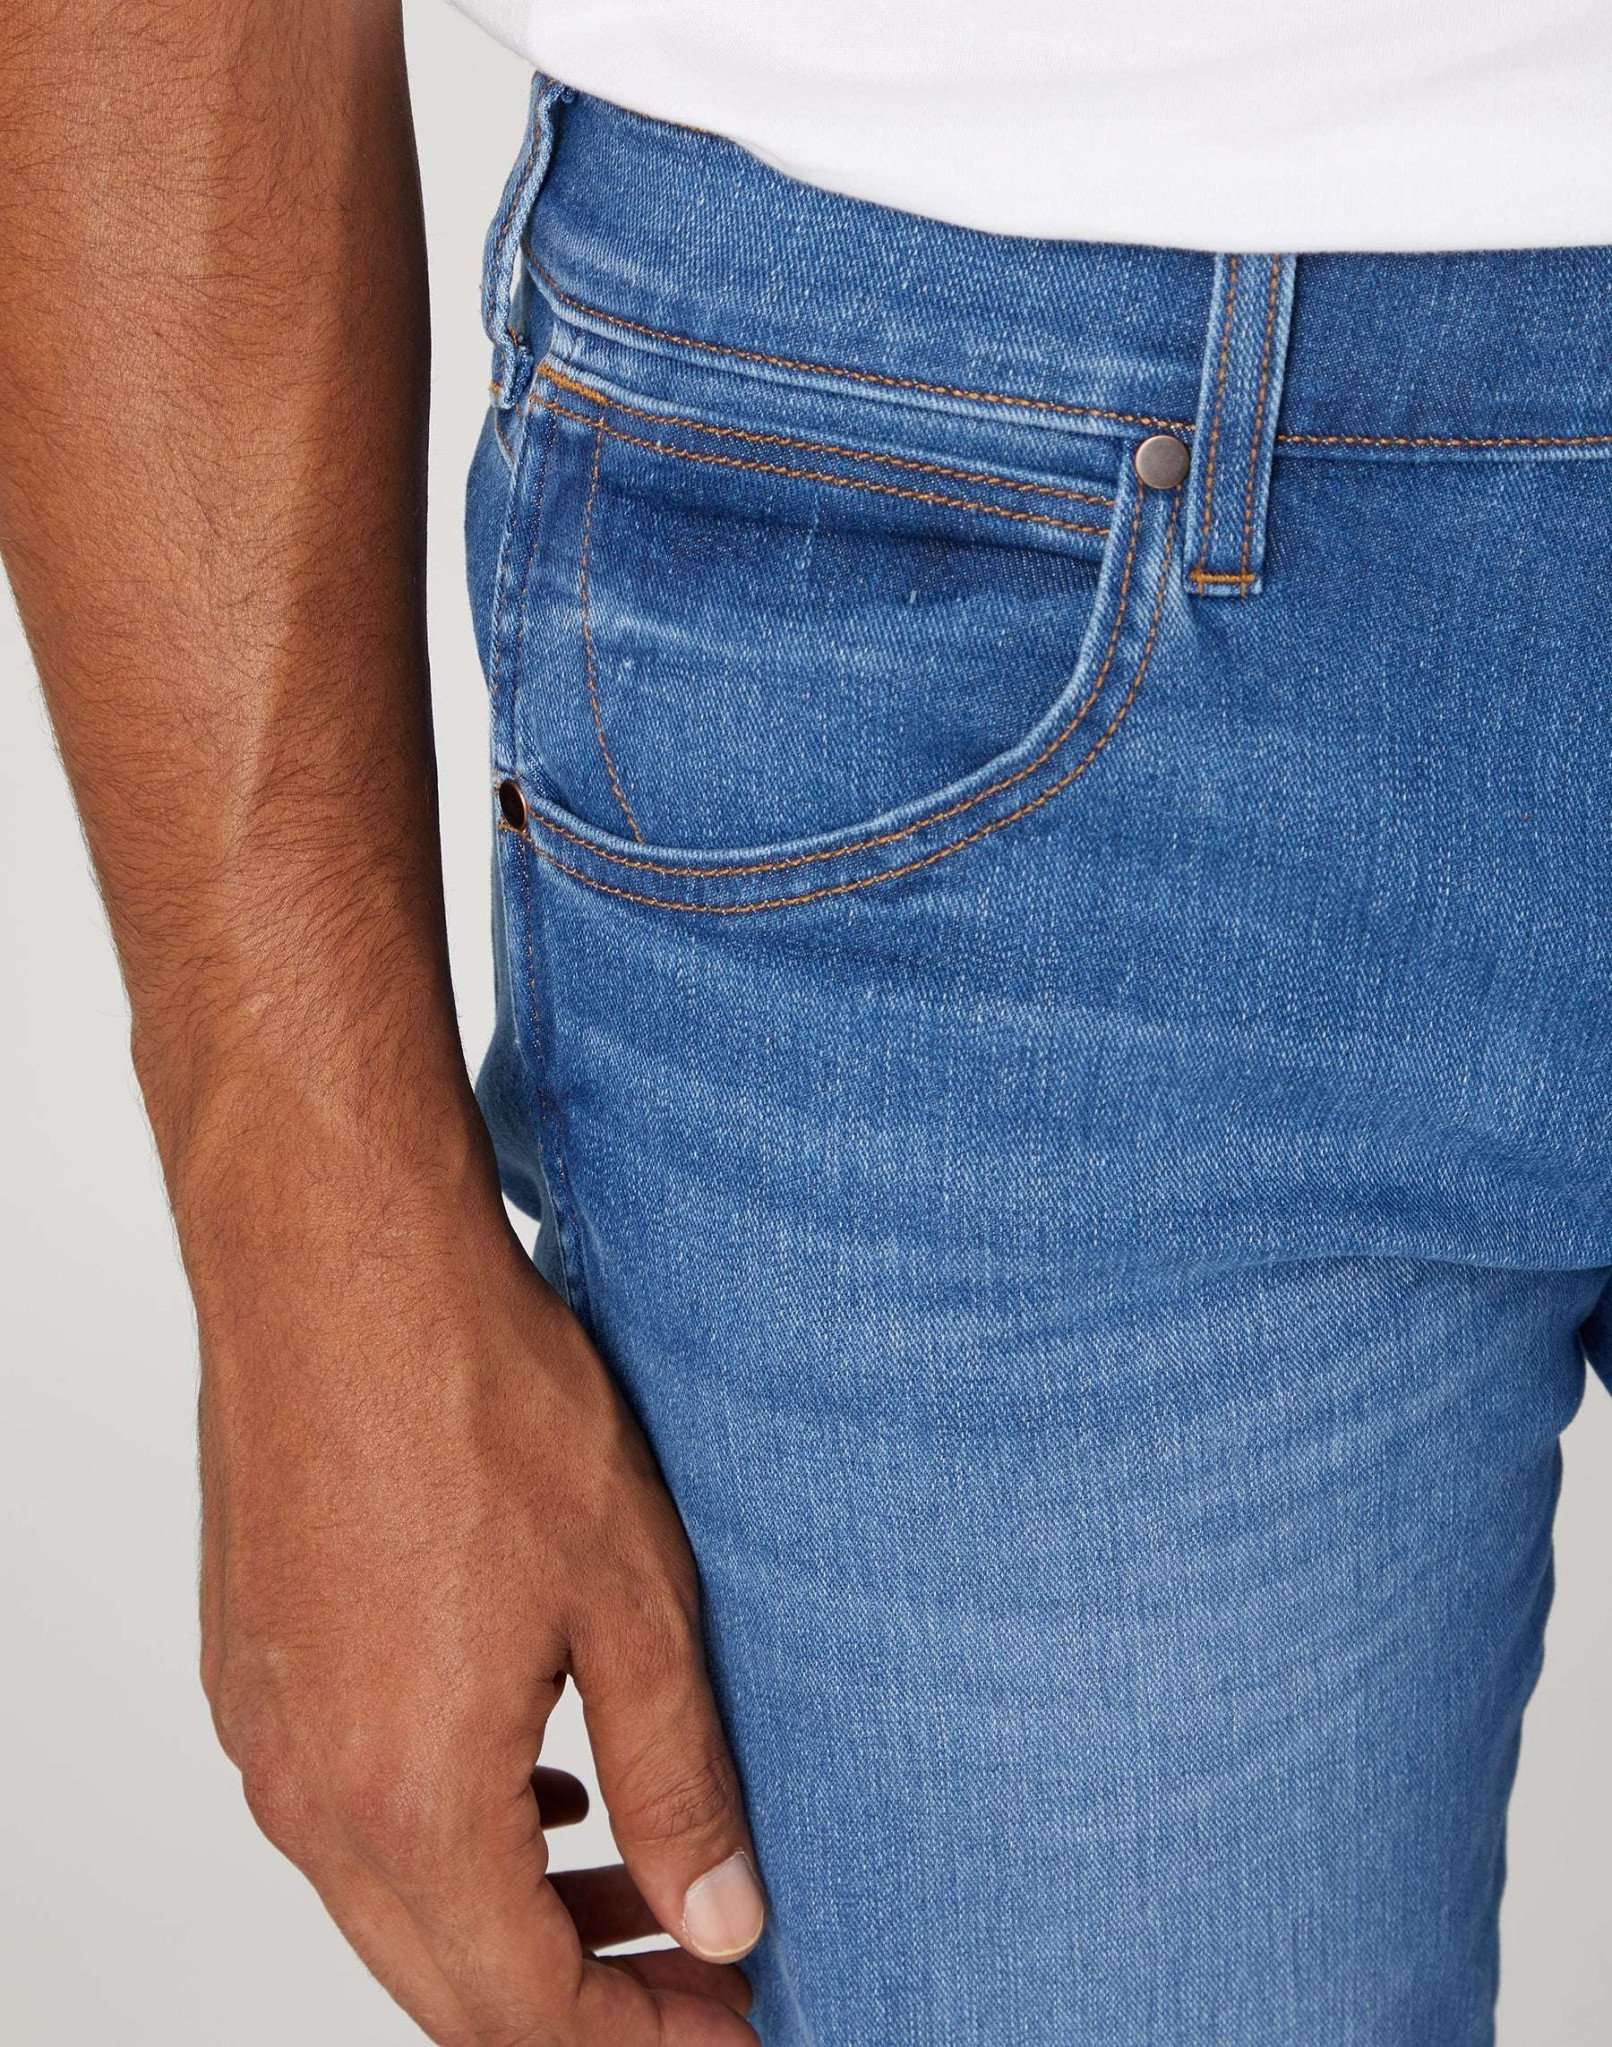 Colton Shorts in Blue Vortex Jeansshorts Wrangler   